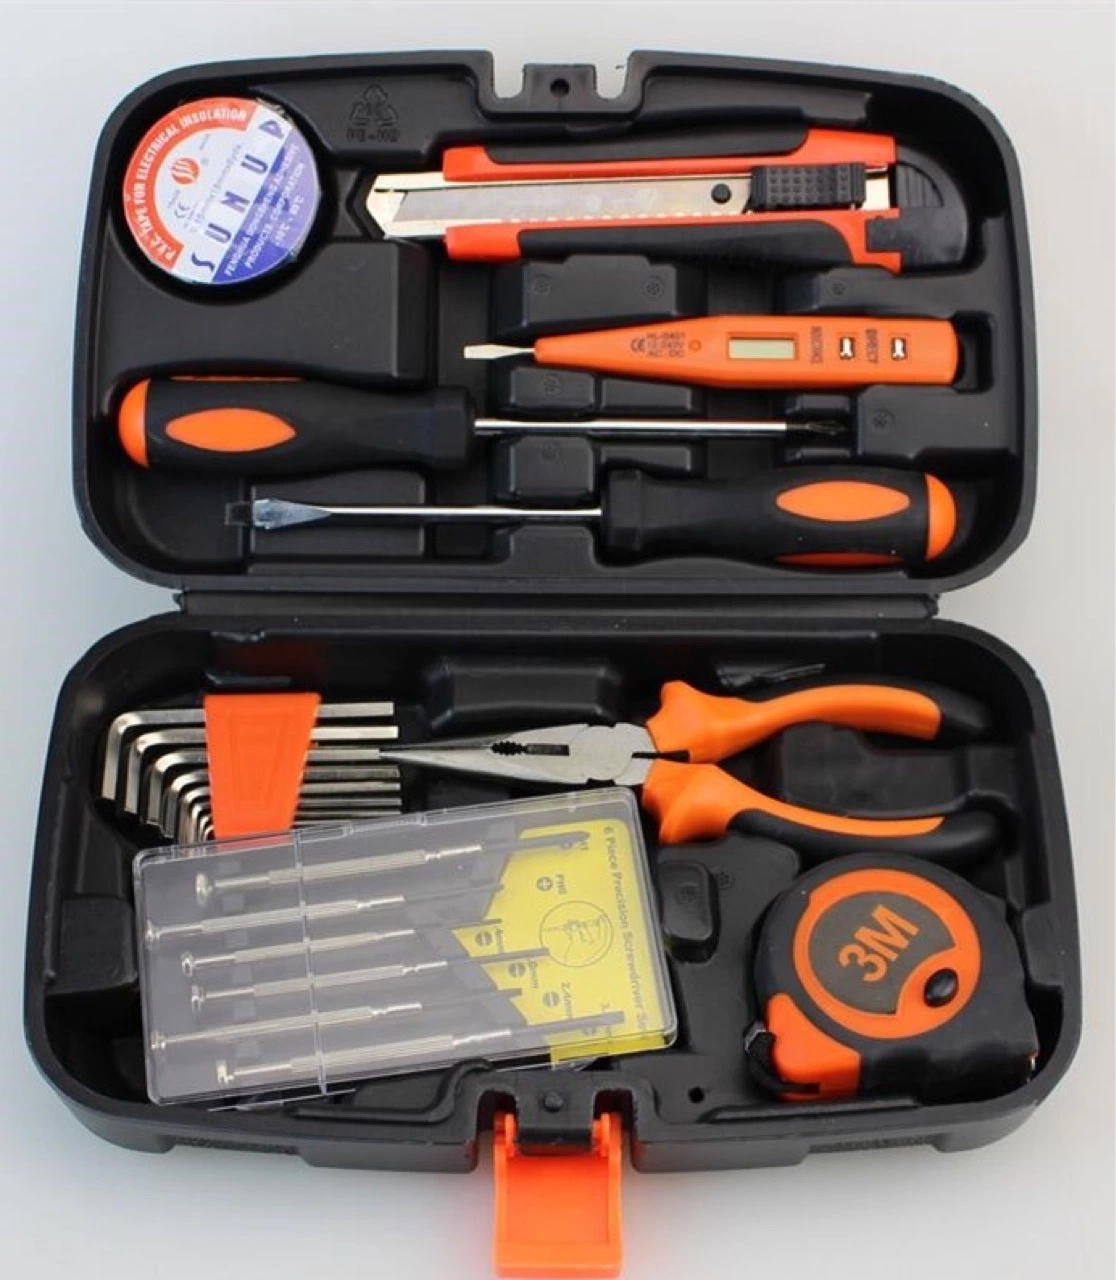 Hardware Household Practical Multifunctional Repair Hand Tool Set